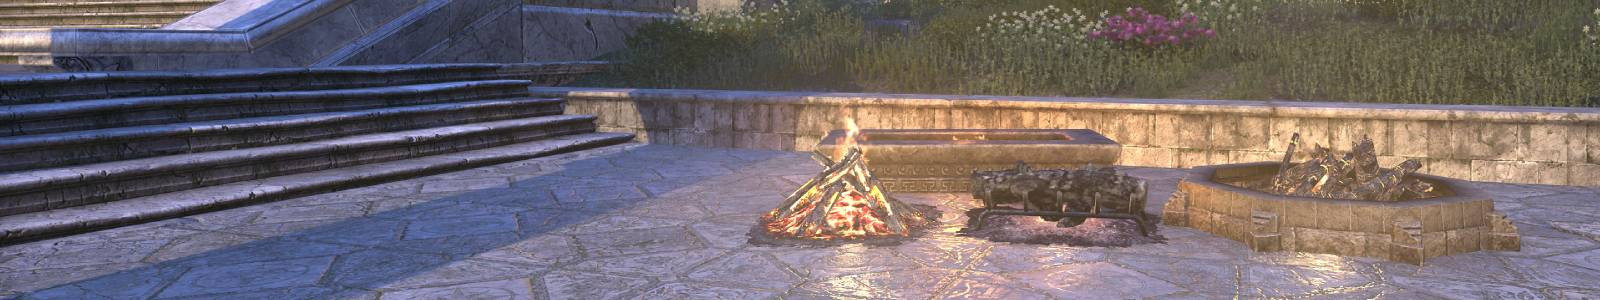 Riekling Bonfire, Ceremonial - ESO header